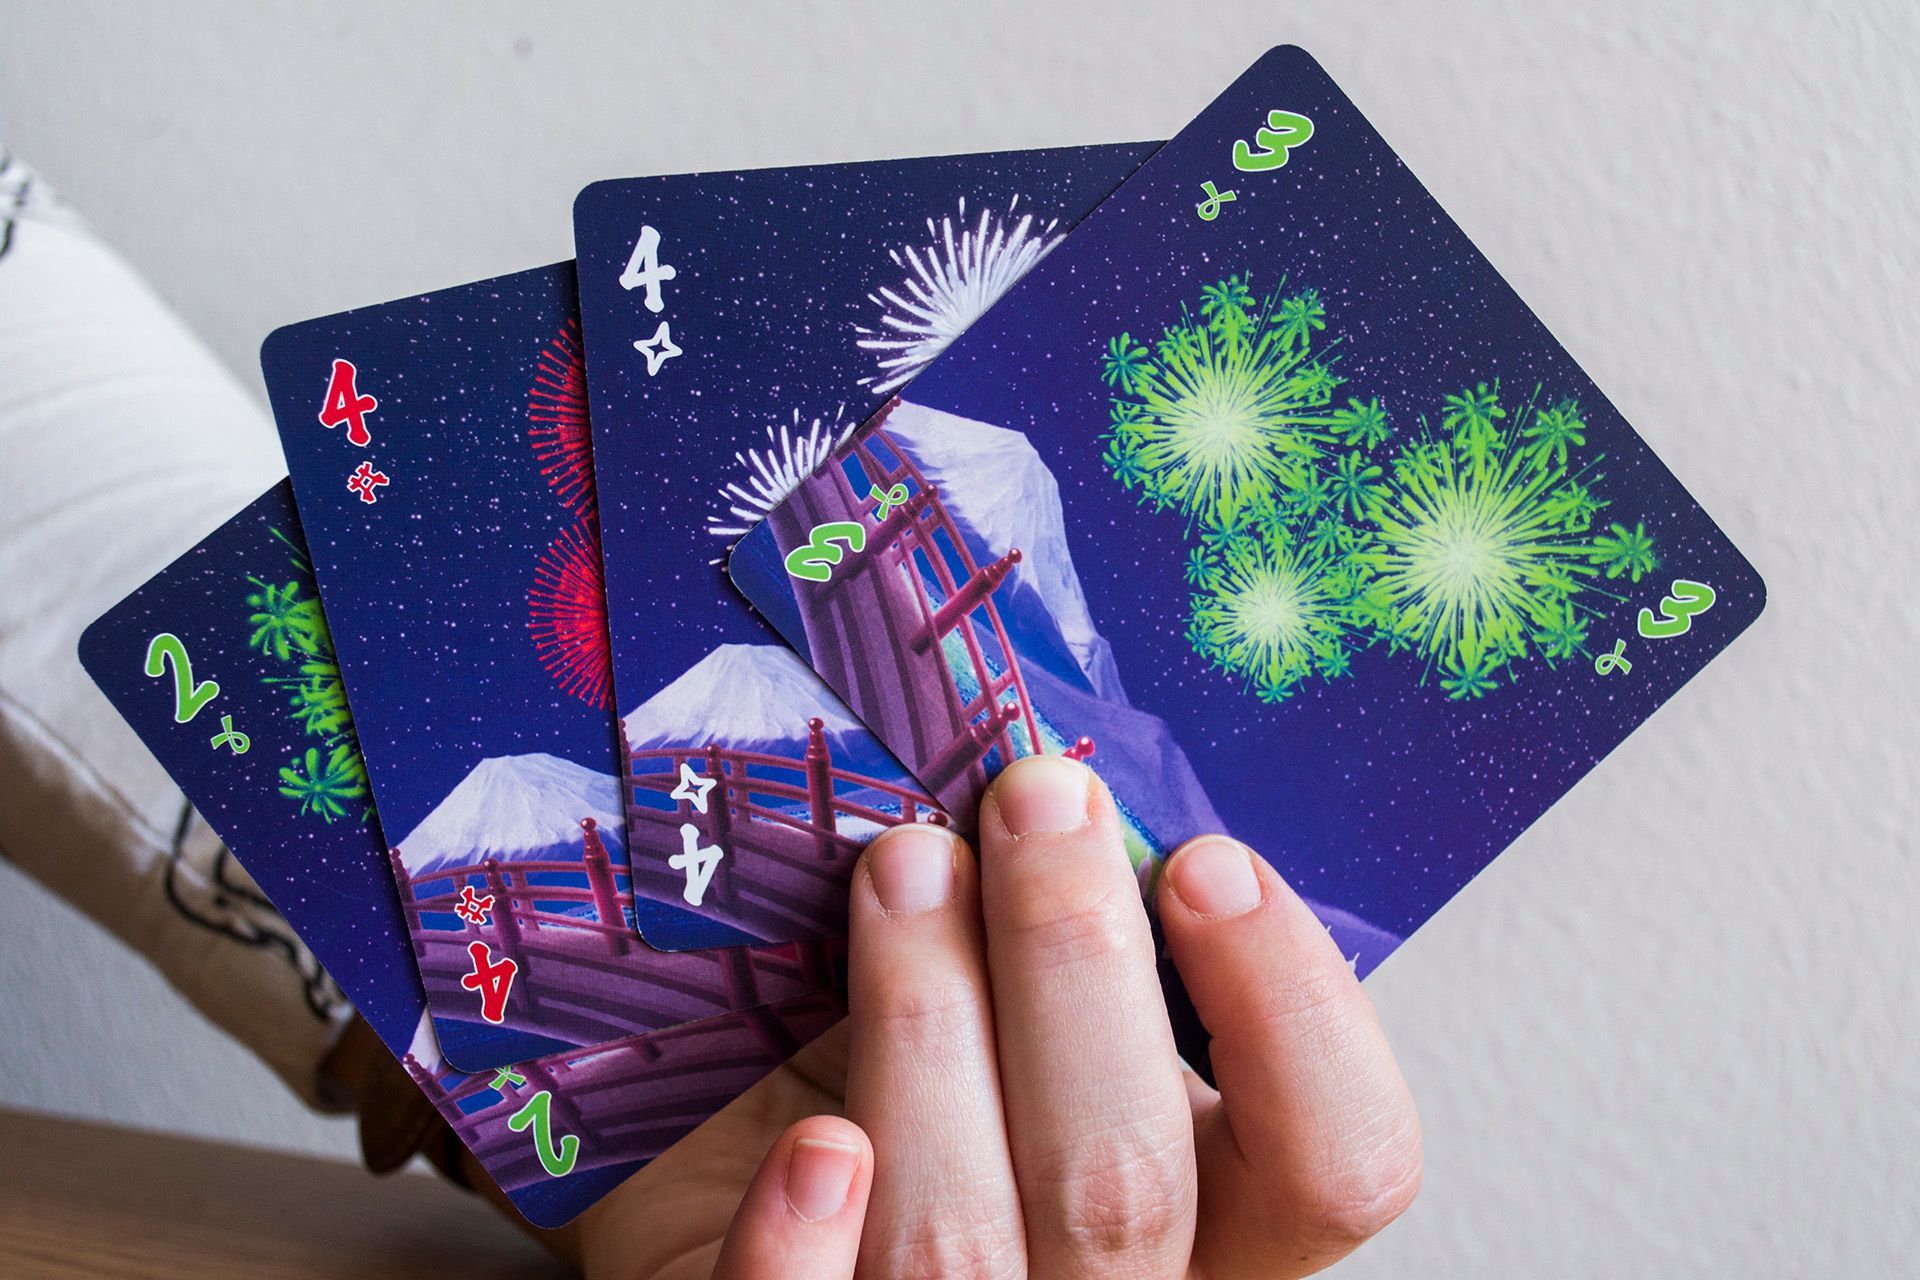 Hanabi kártyajáték